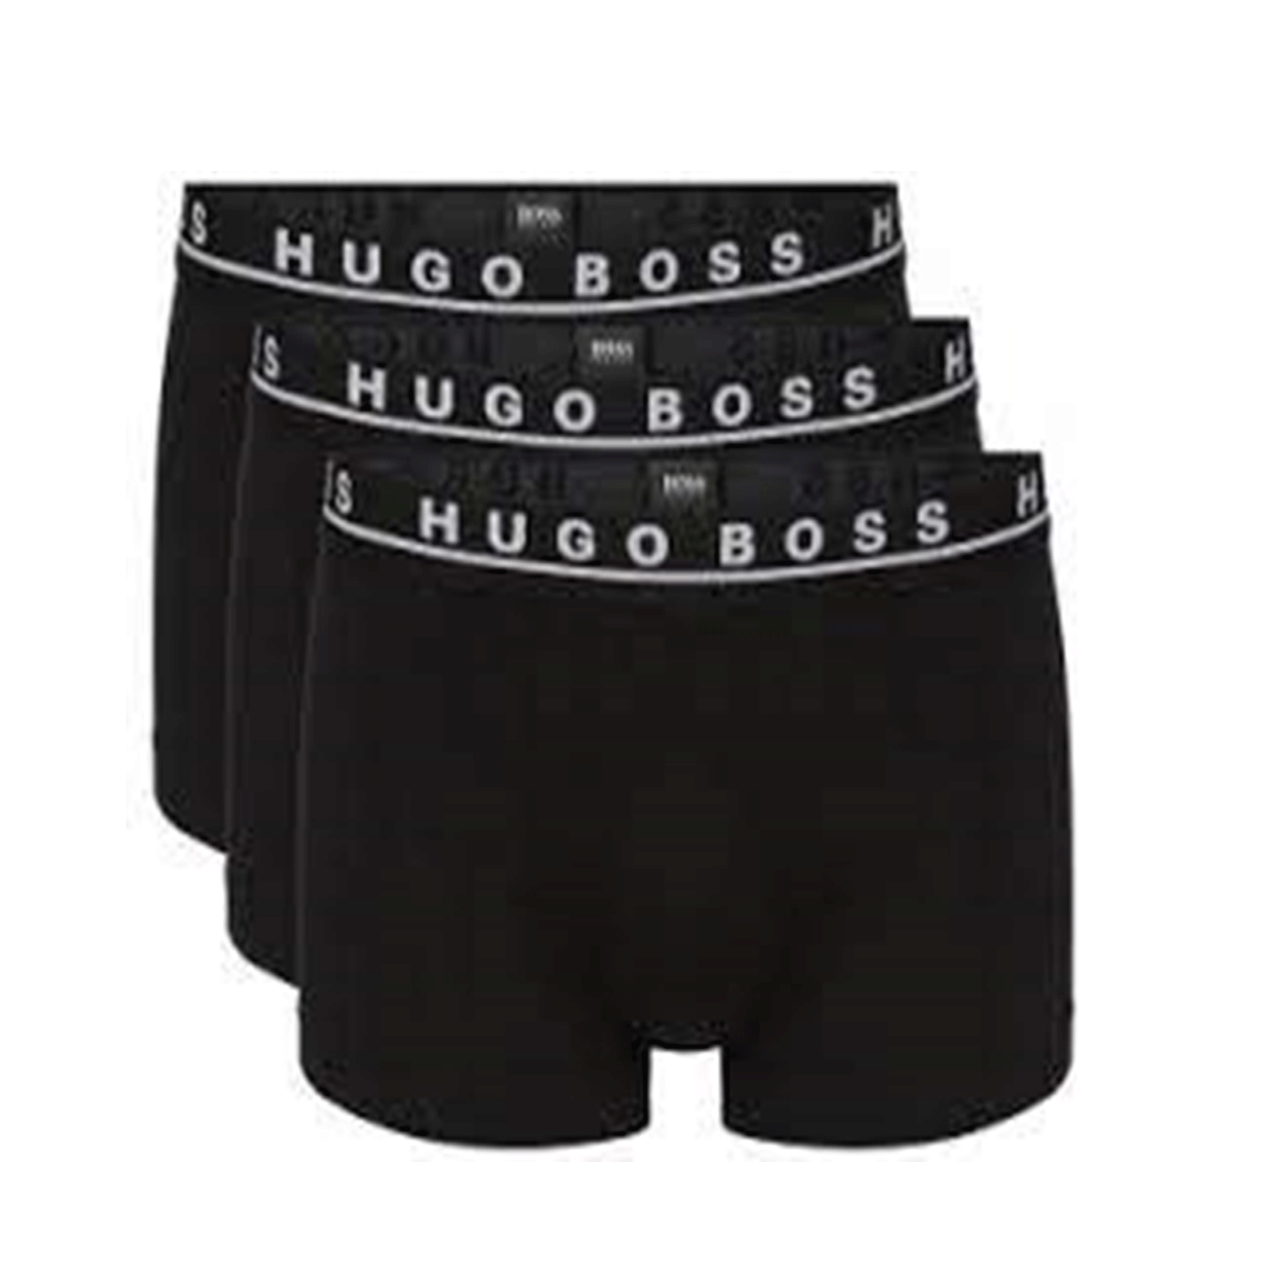 HUGO BOSS 3 PACK TRUNK BOXERS BLACK 50325403-001 | Go Wholesale